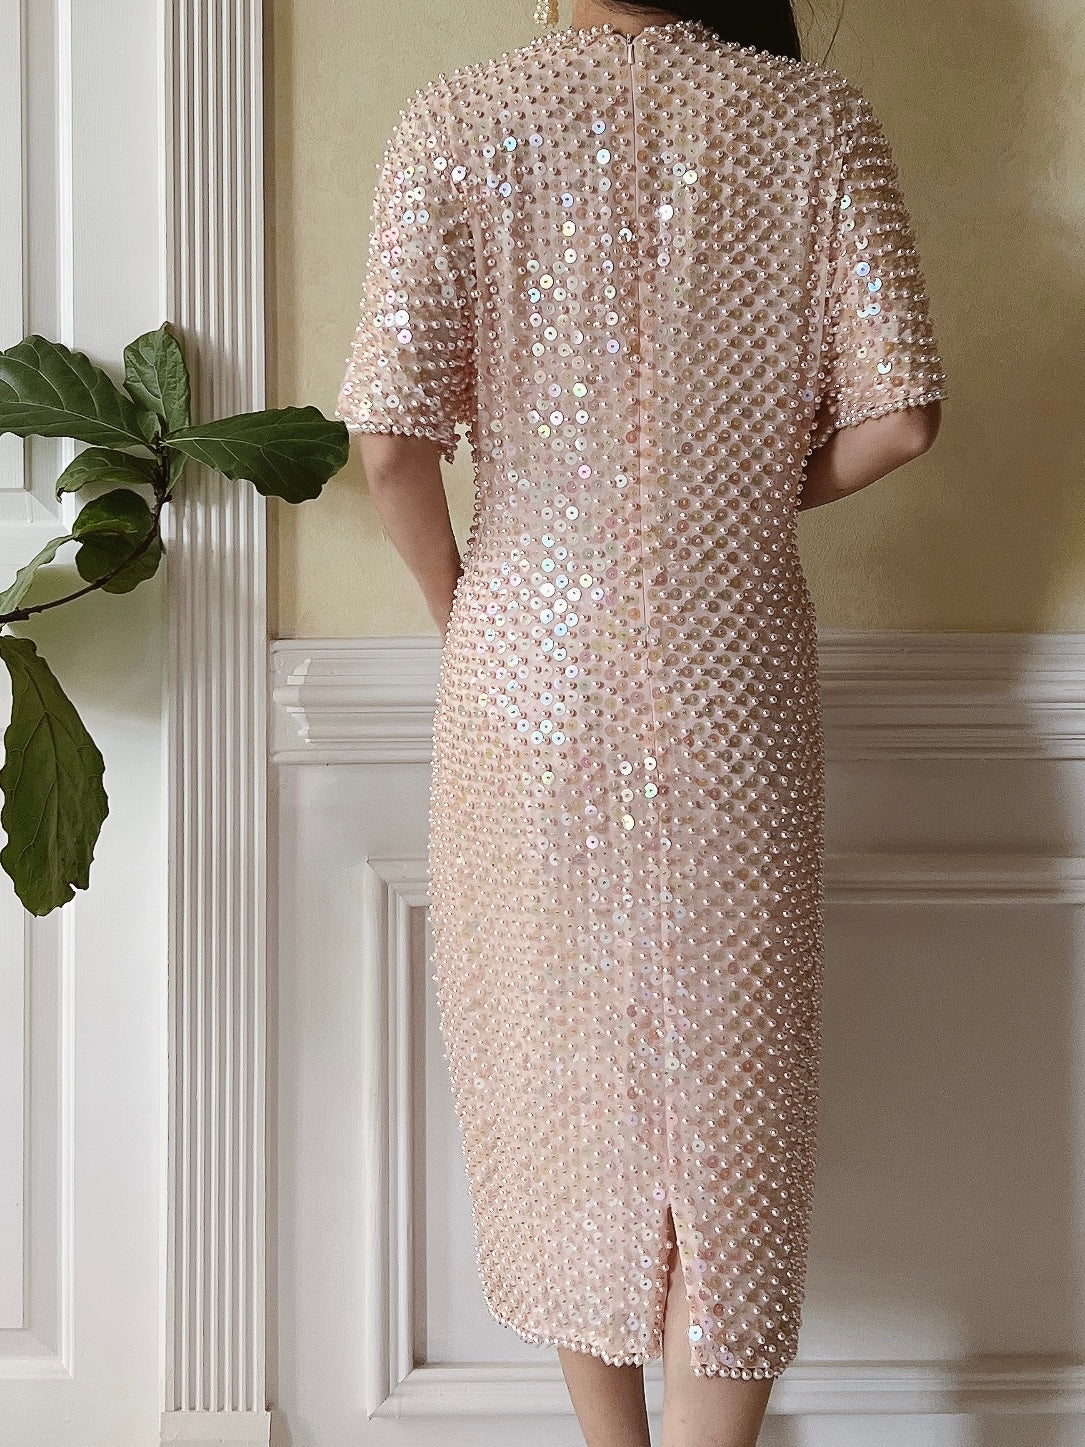 Vintage Shell Pink Pearl/Sequins Dress - M/L